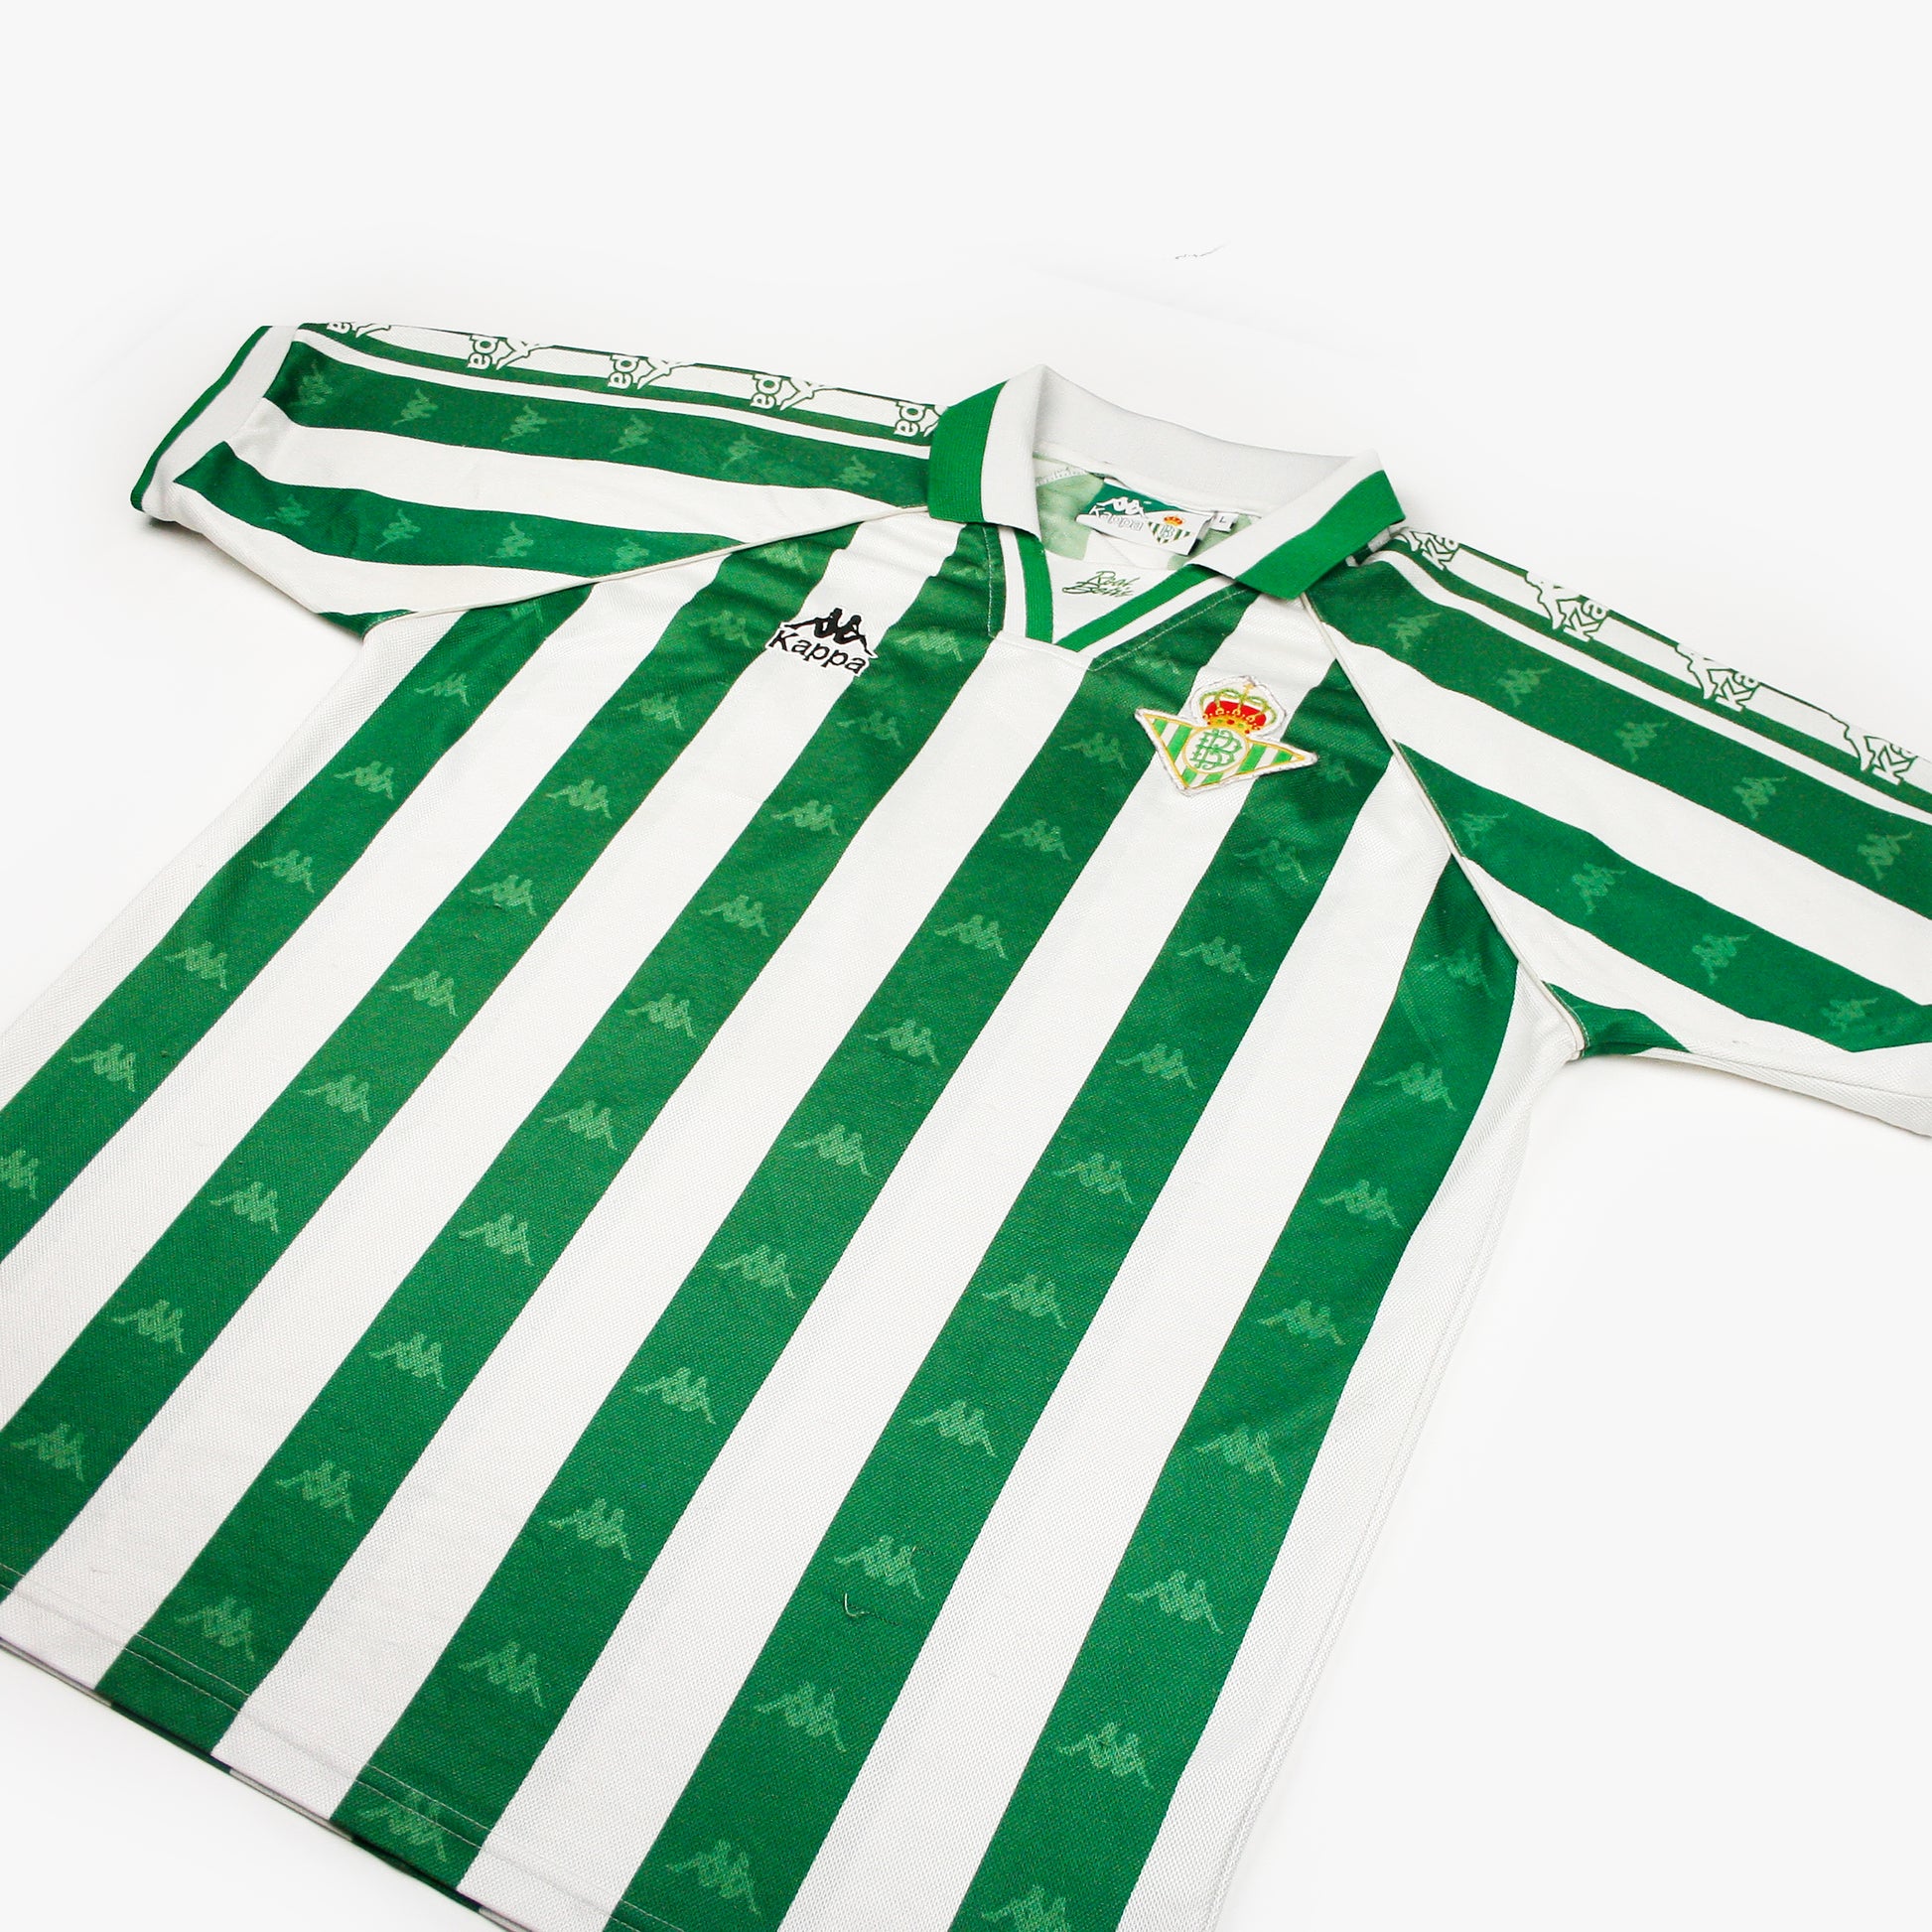 Camiseta Retro Real Betis 95/97 – Real Jase Football Company